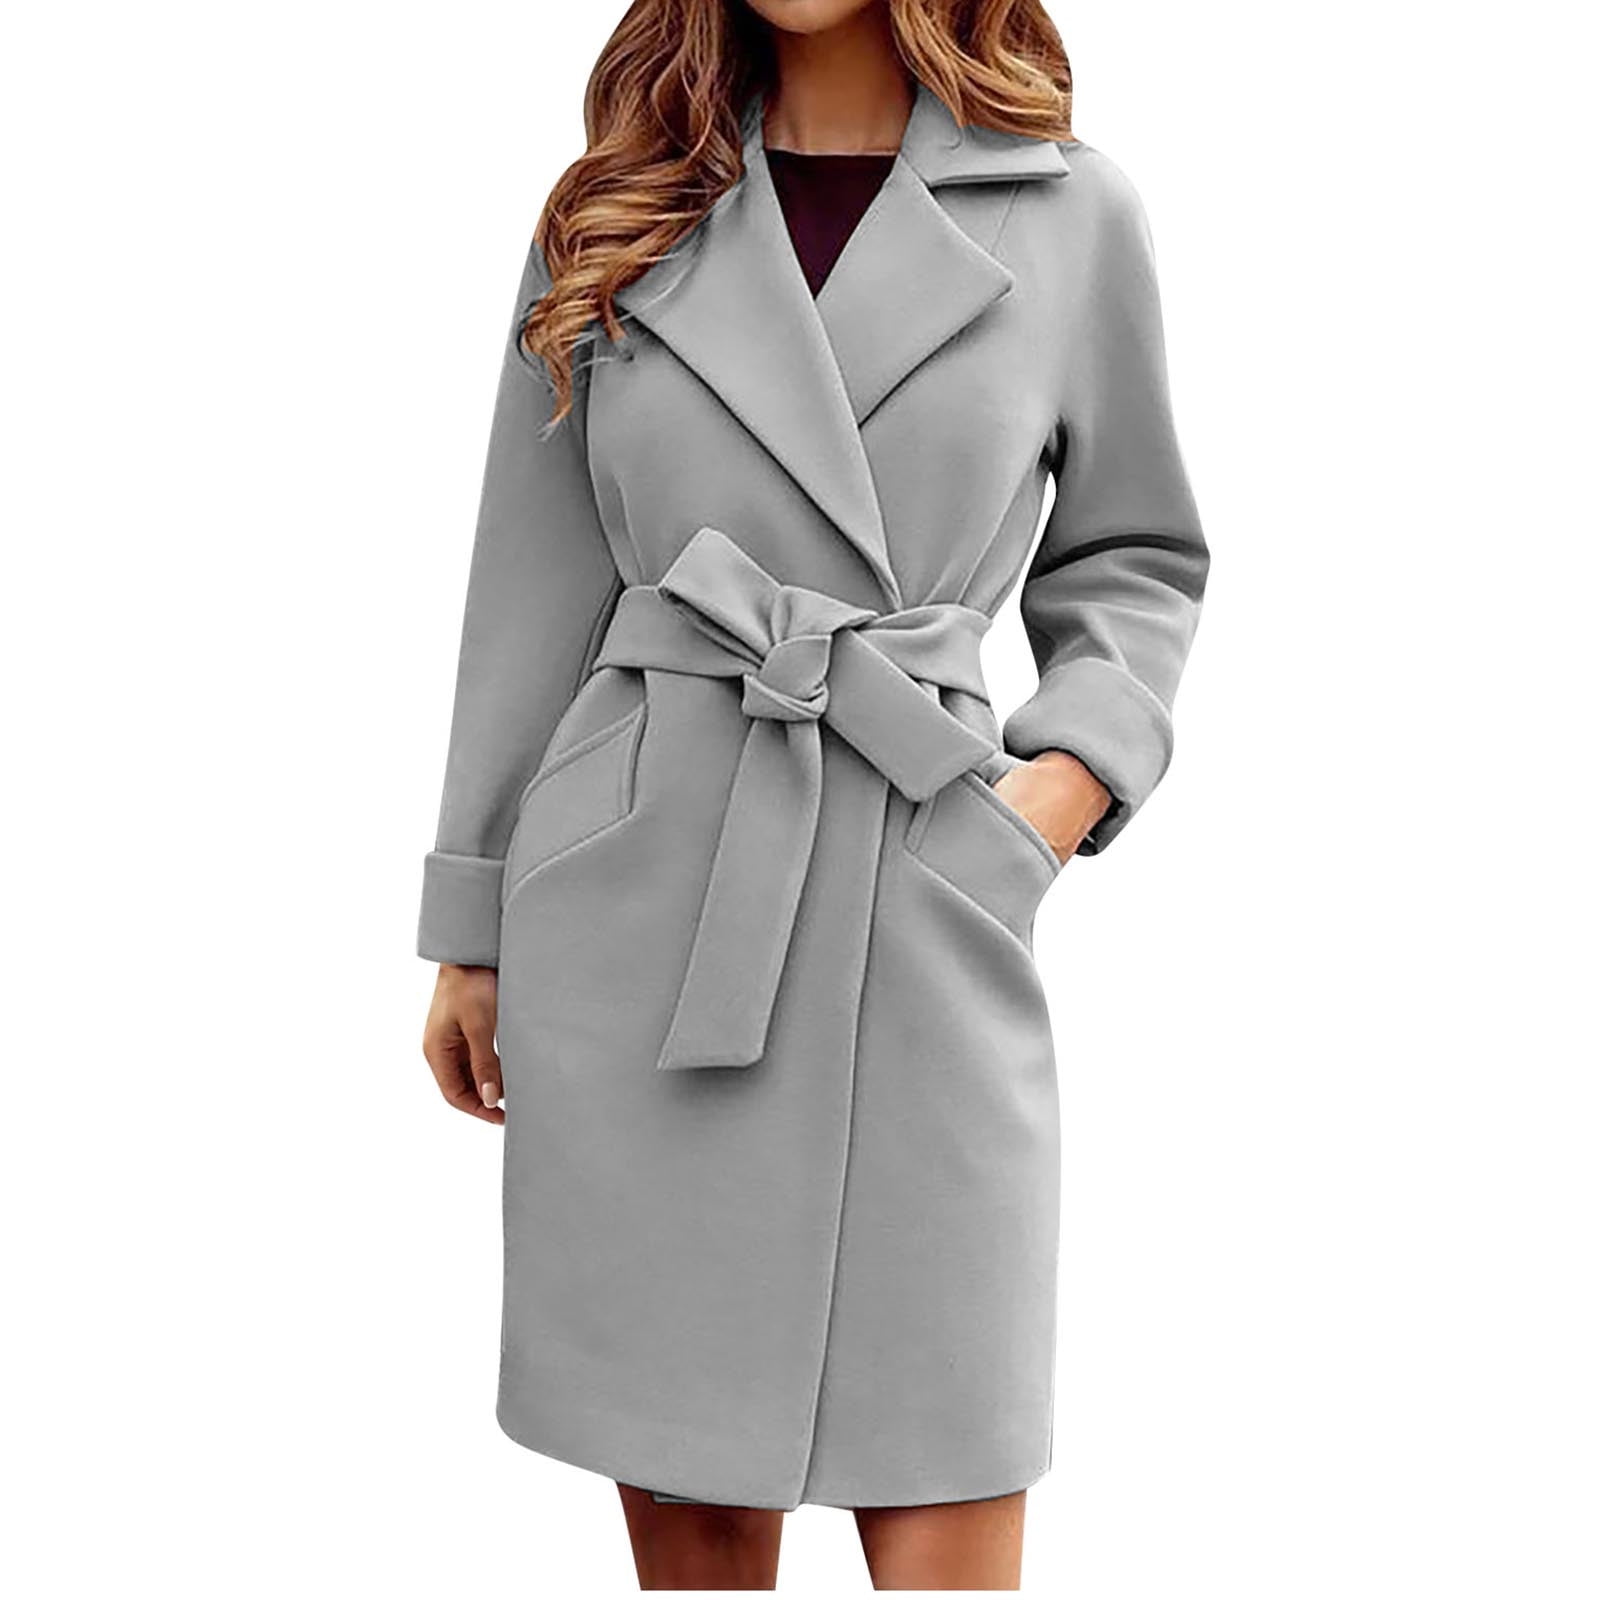 Womens dress coats in 13 amazing winter colors - Free test coat